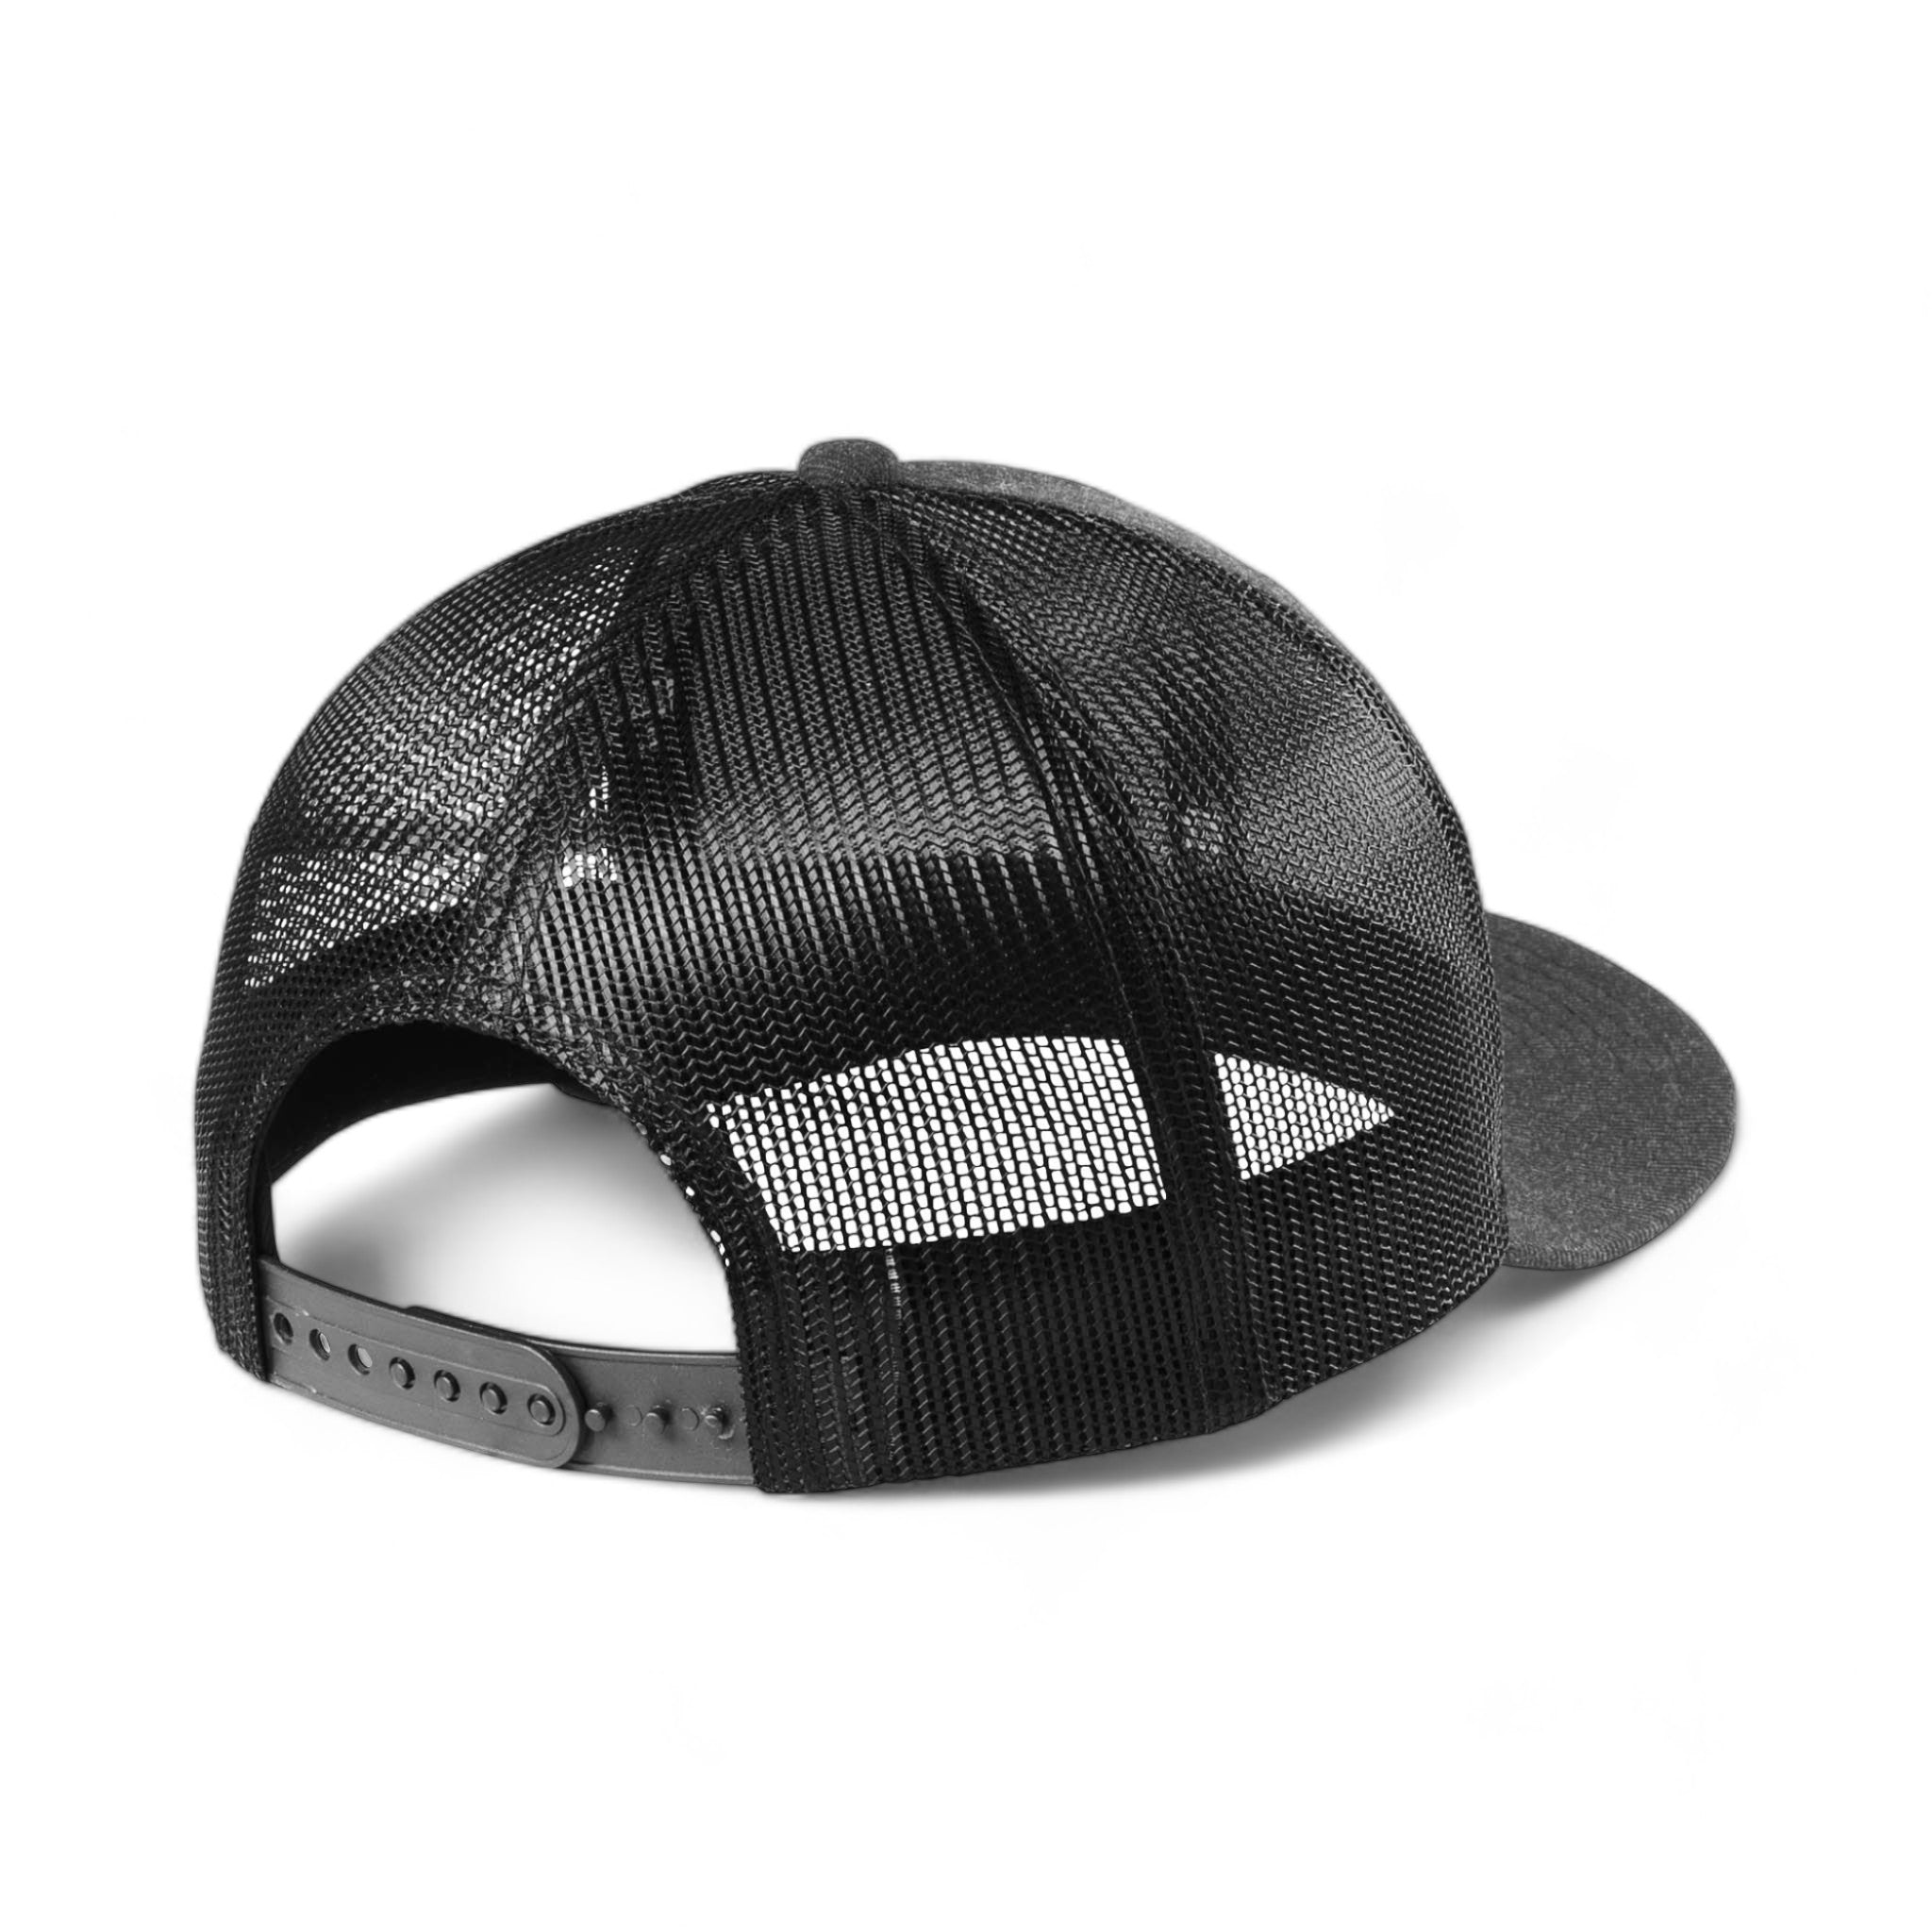 Back view of New Era NE207 custom hat in heather graphite and black